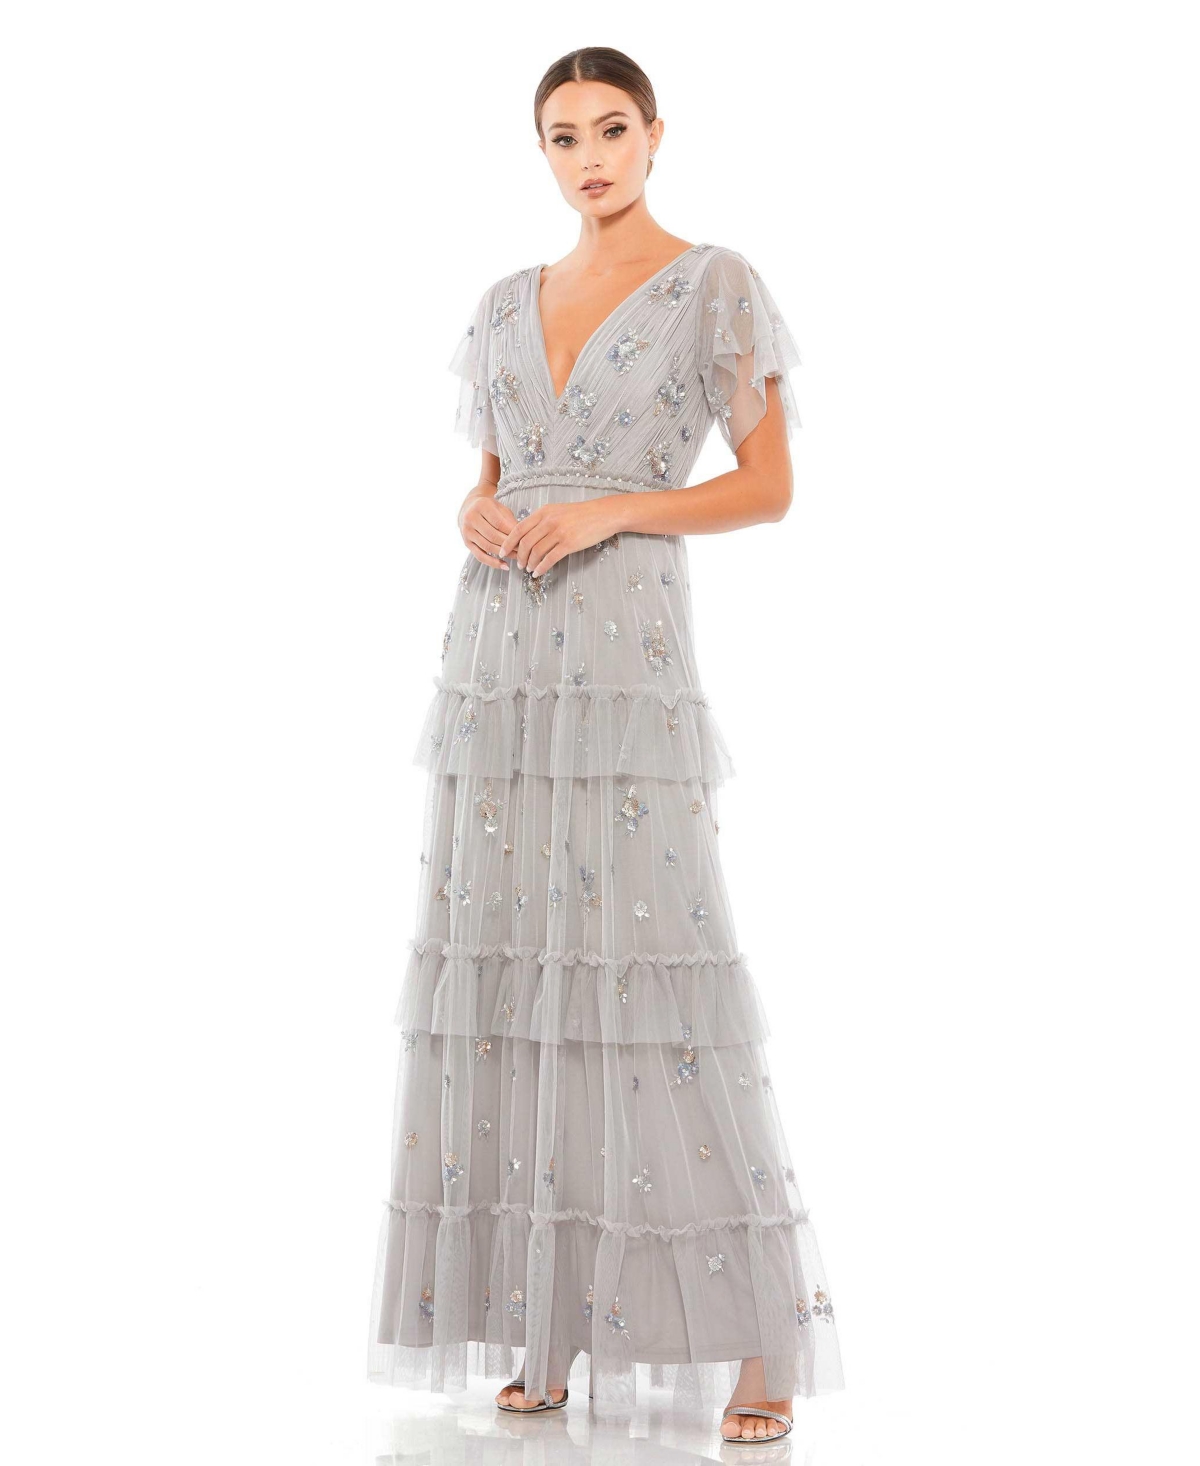 1920s Evening Dresses & Formal Gowns Womens Ruffle Tiered Embellished Flutter Sleeve Gown - Platinum $598.00 AT vintagedancer.com